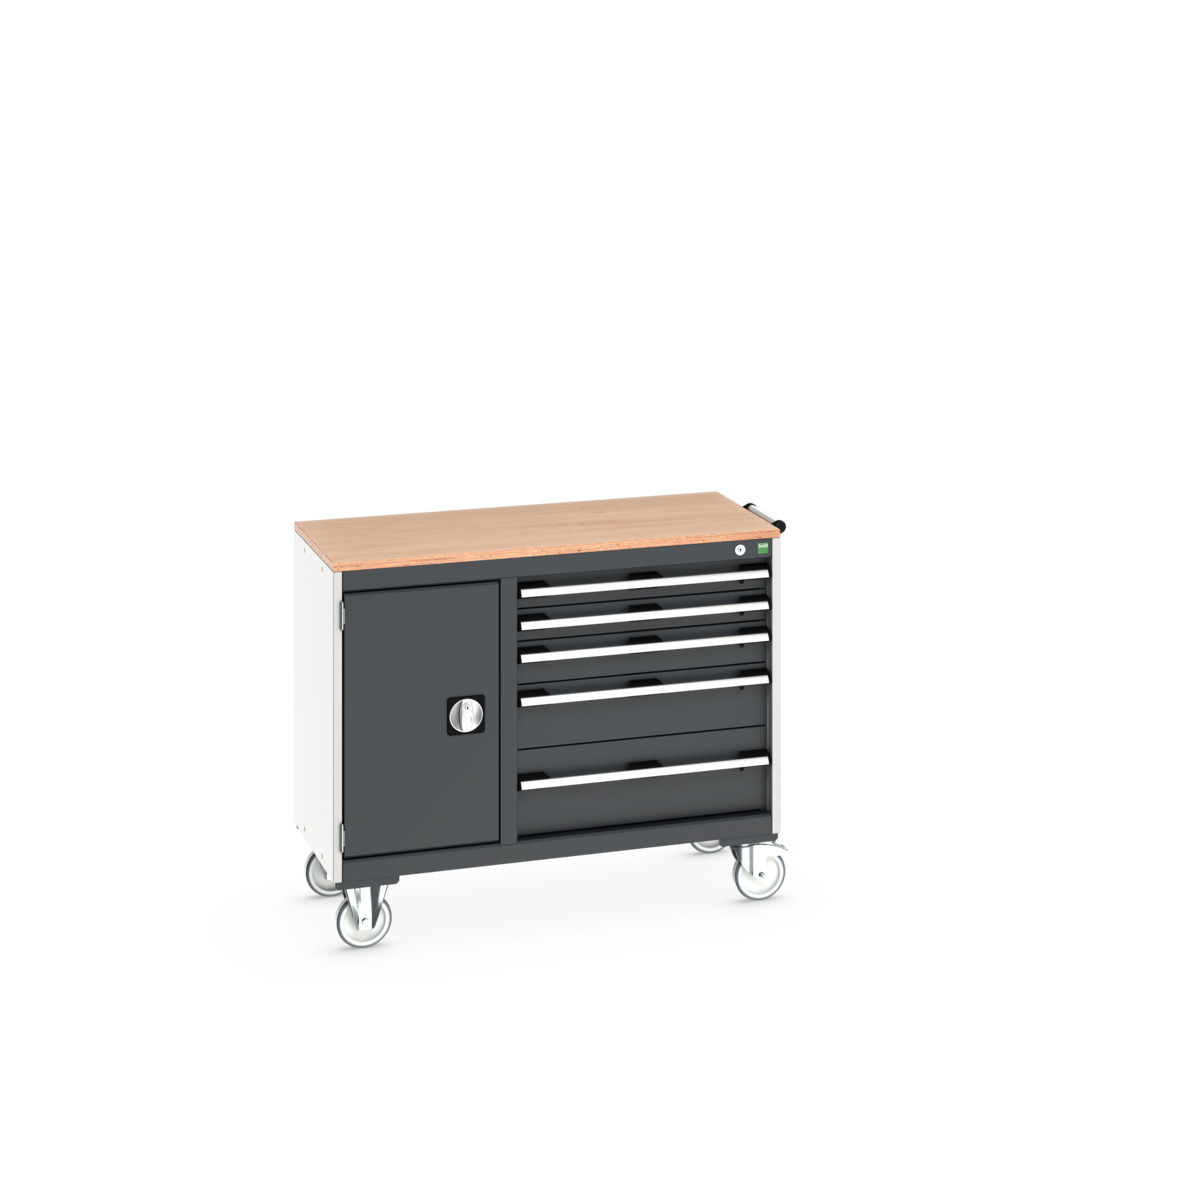 41006013. - cubio mobile cabinet 40/60 (mpx)